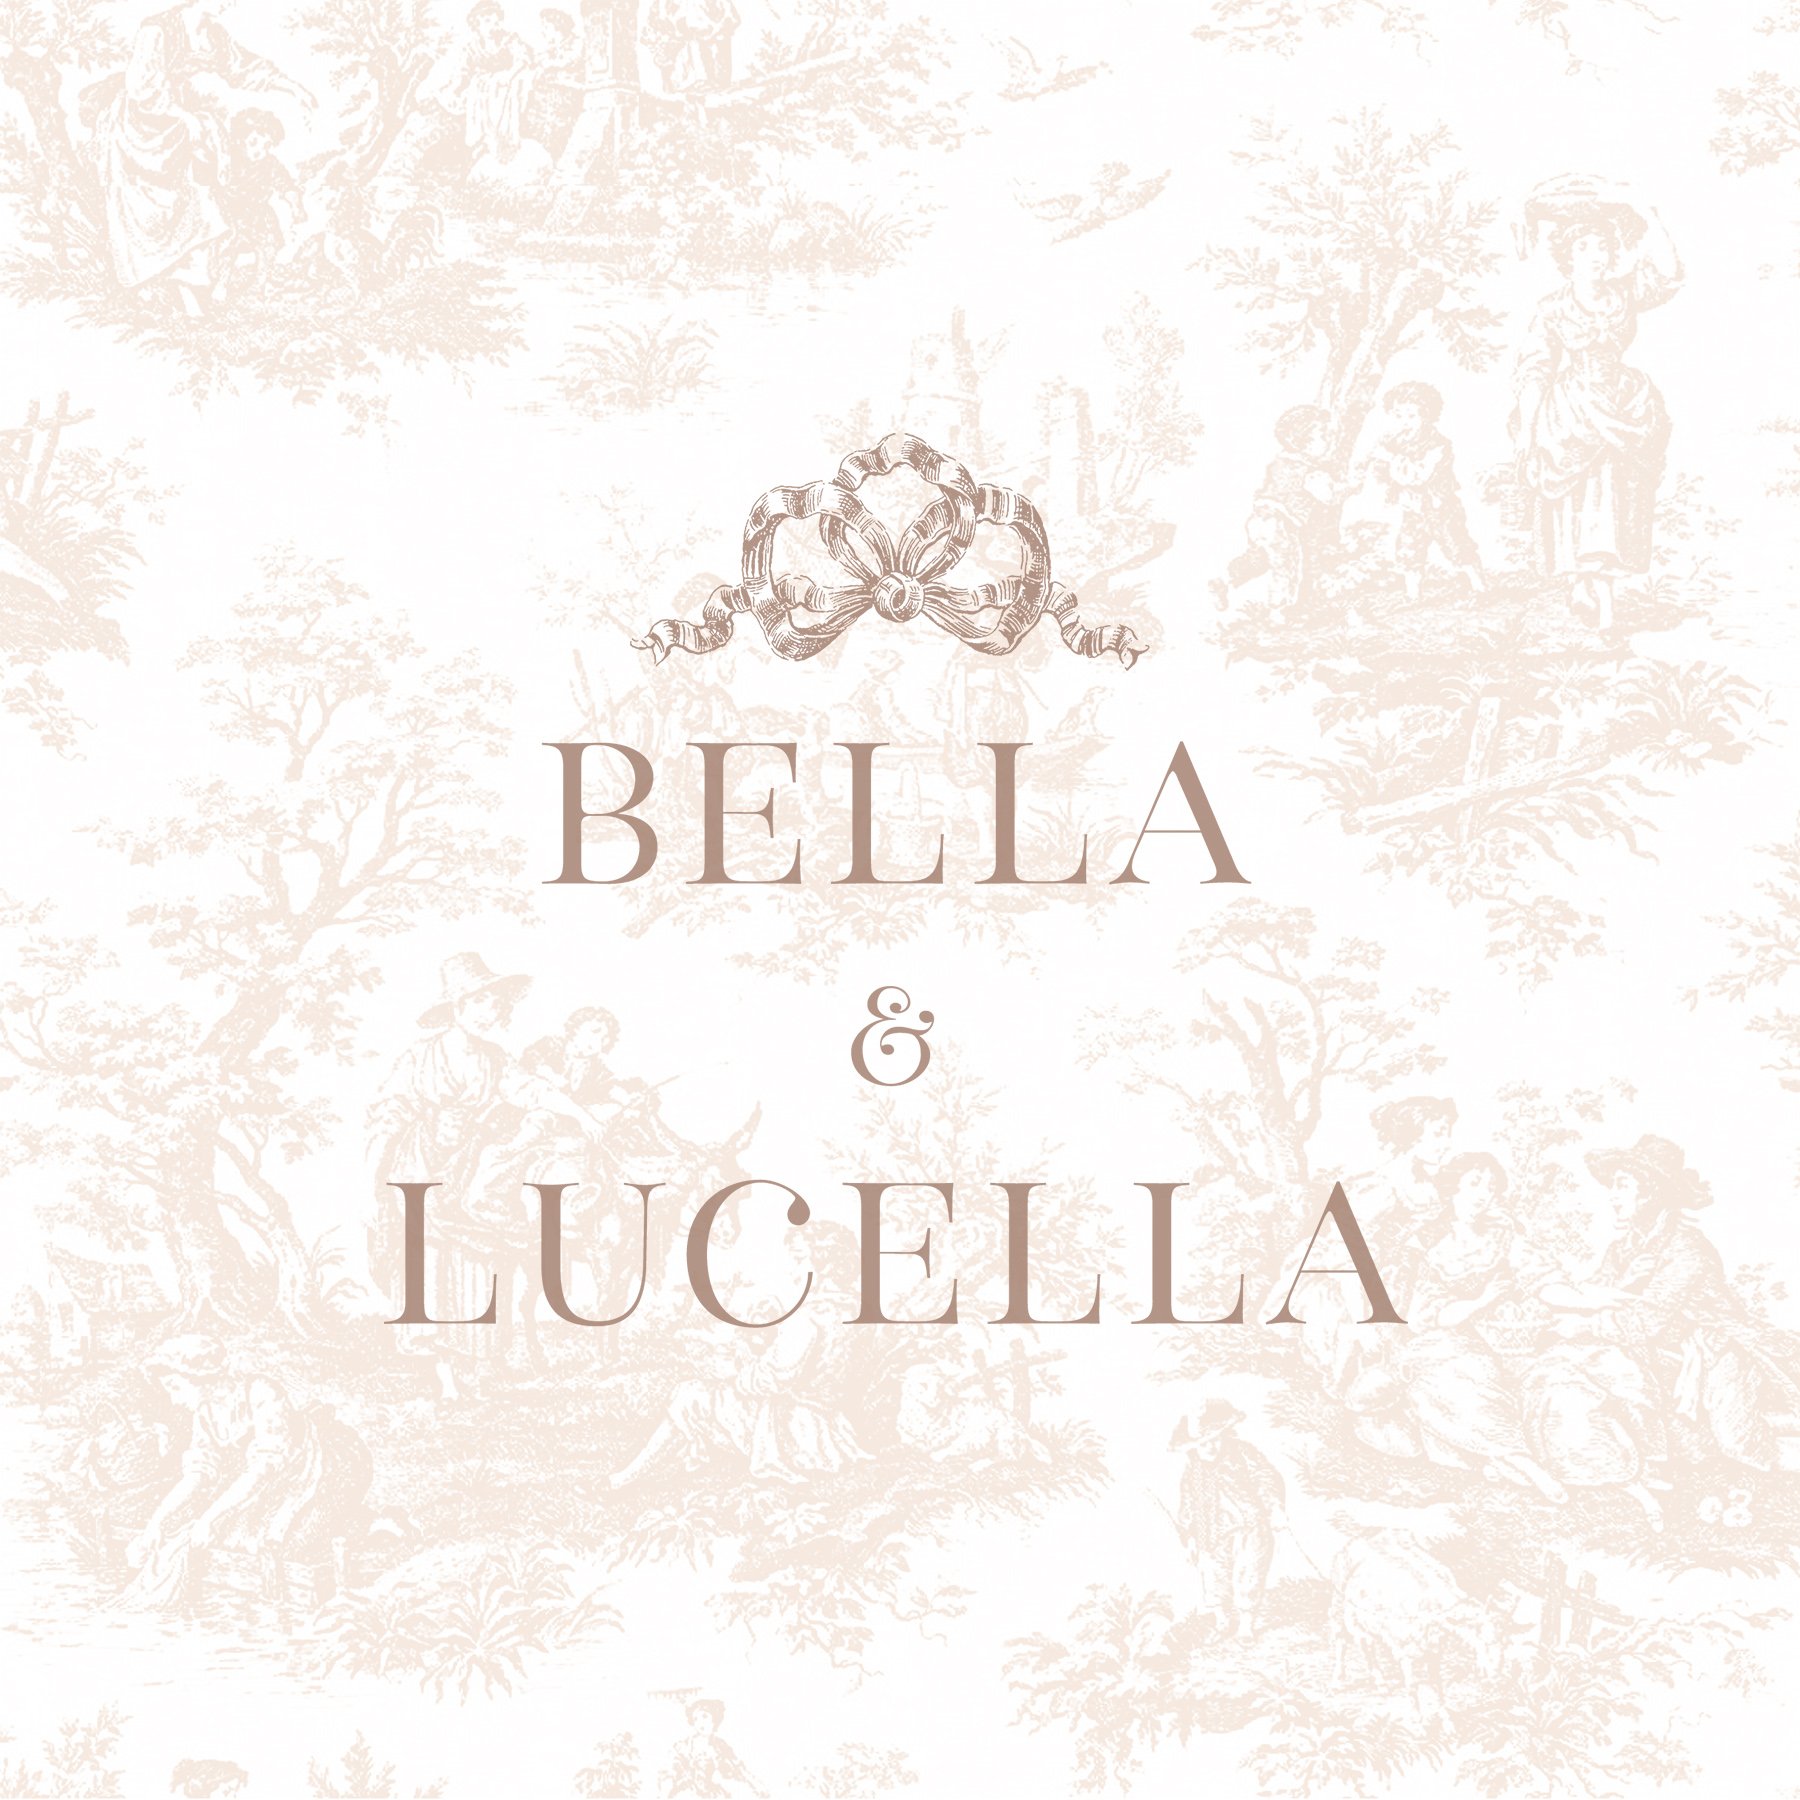 Bella Lucella Main Photo 1.jpg